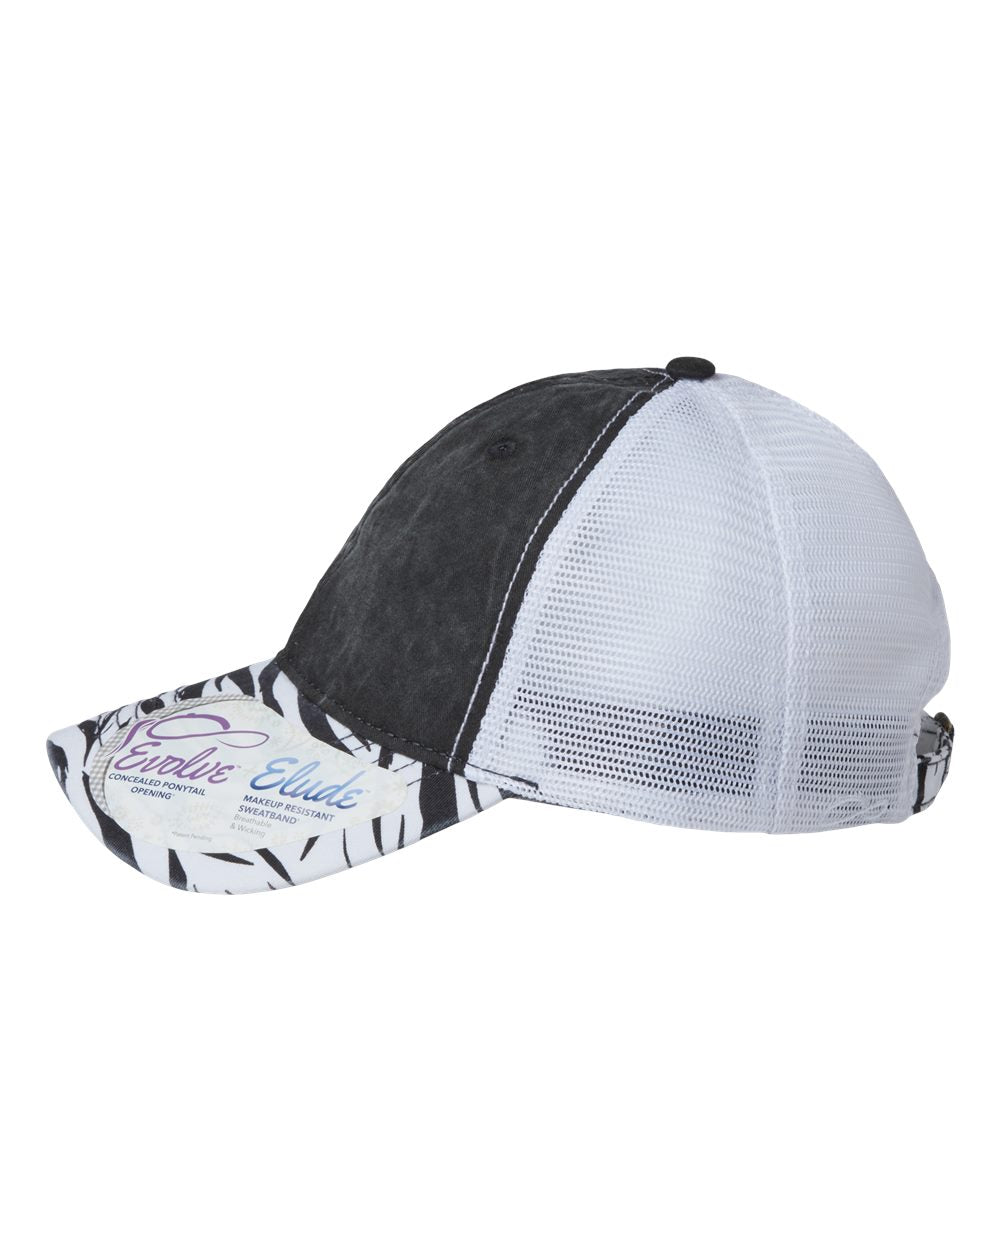 A women's printed visor with mesh back cap in black, zebra print on the visor with white mesh back.